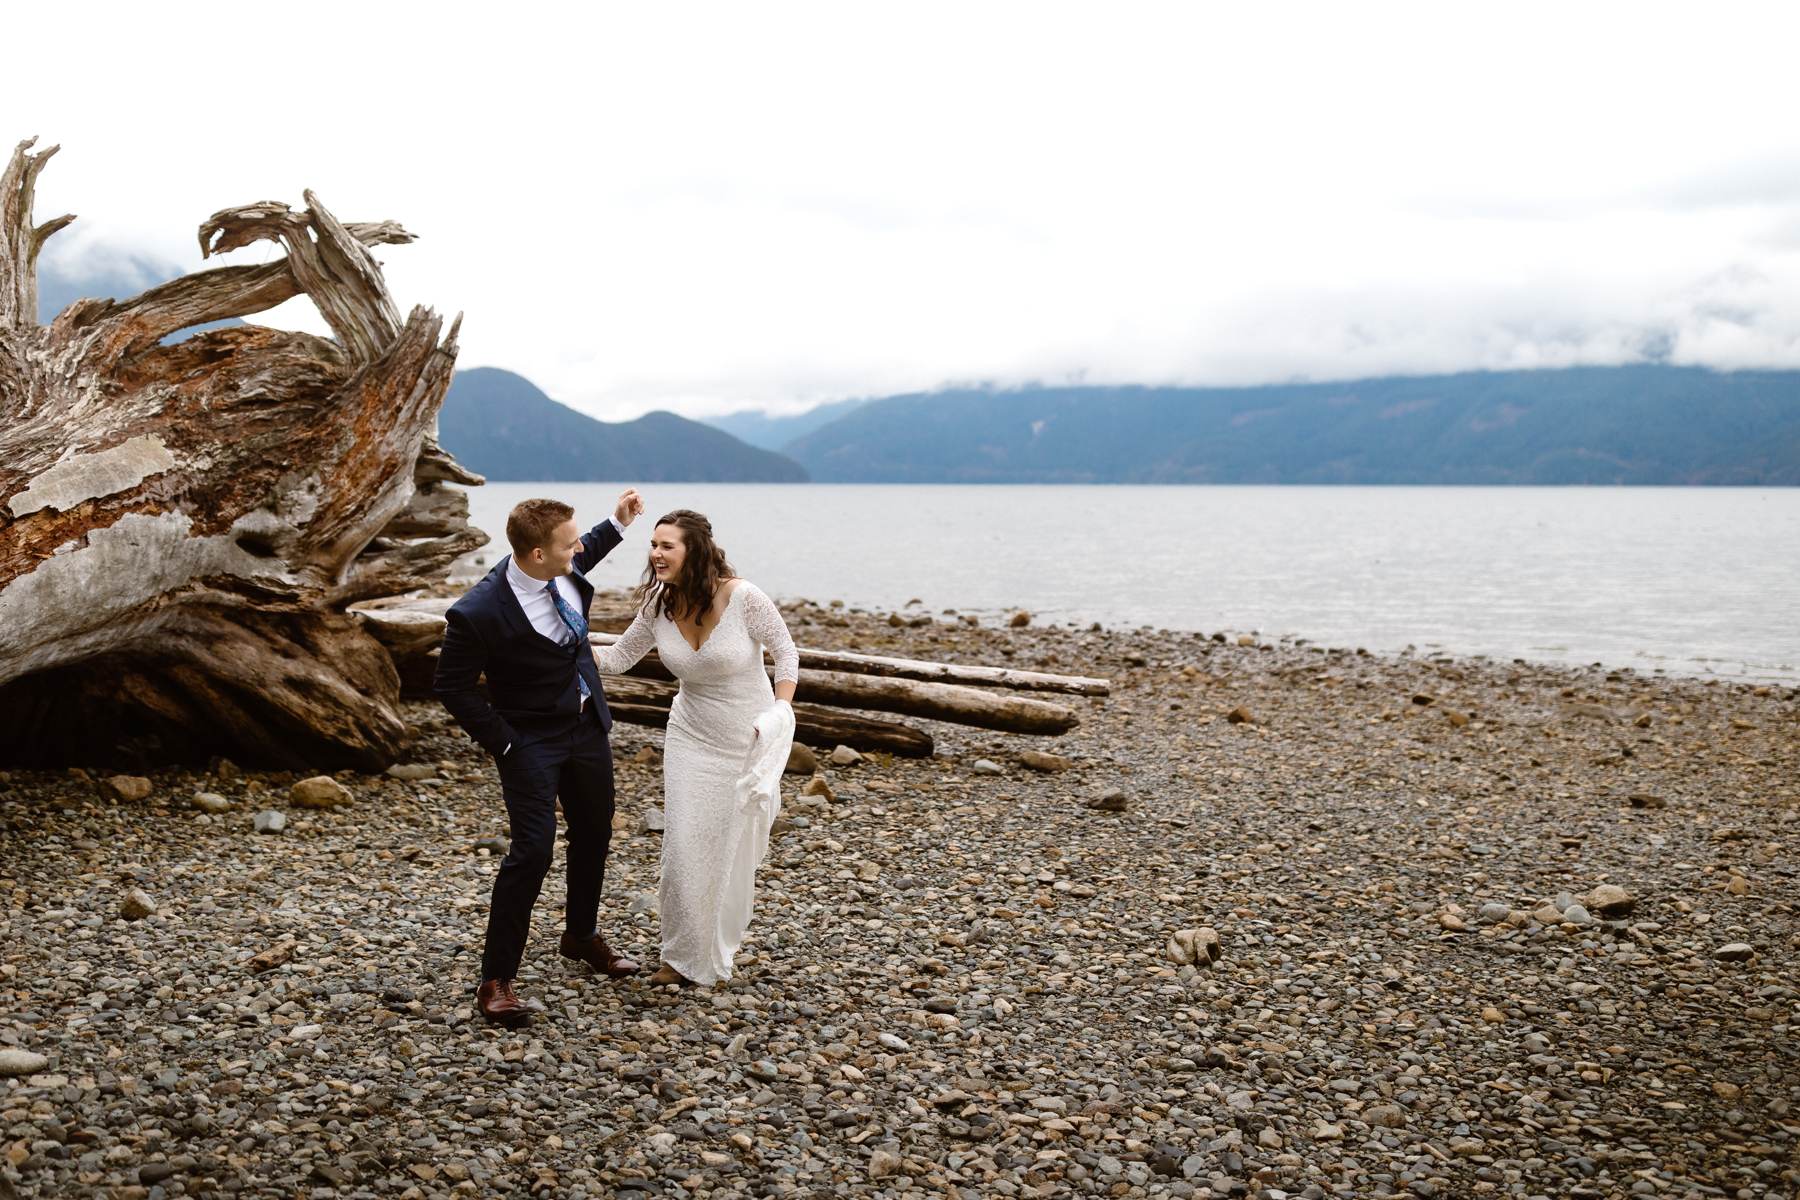 Squamish Wedding Photographers at an Adventurous Elopement - Image 6